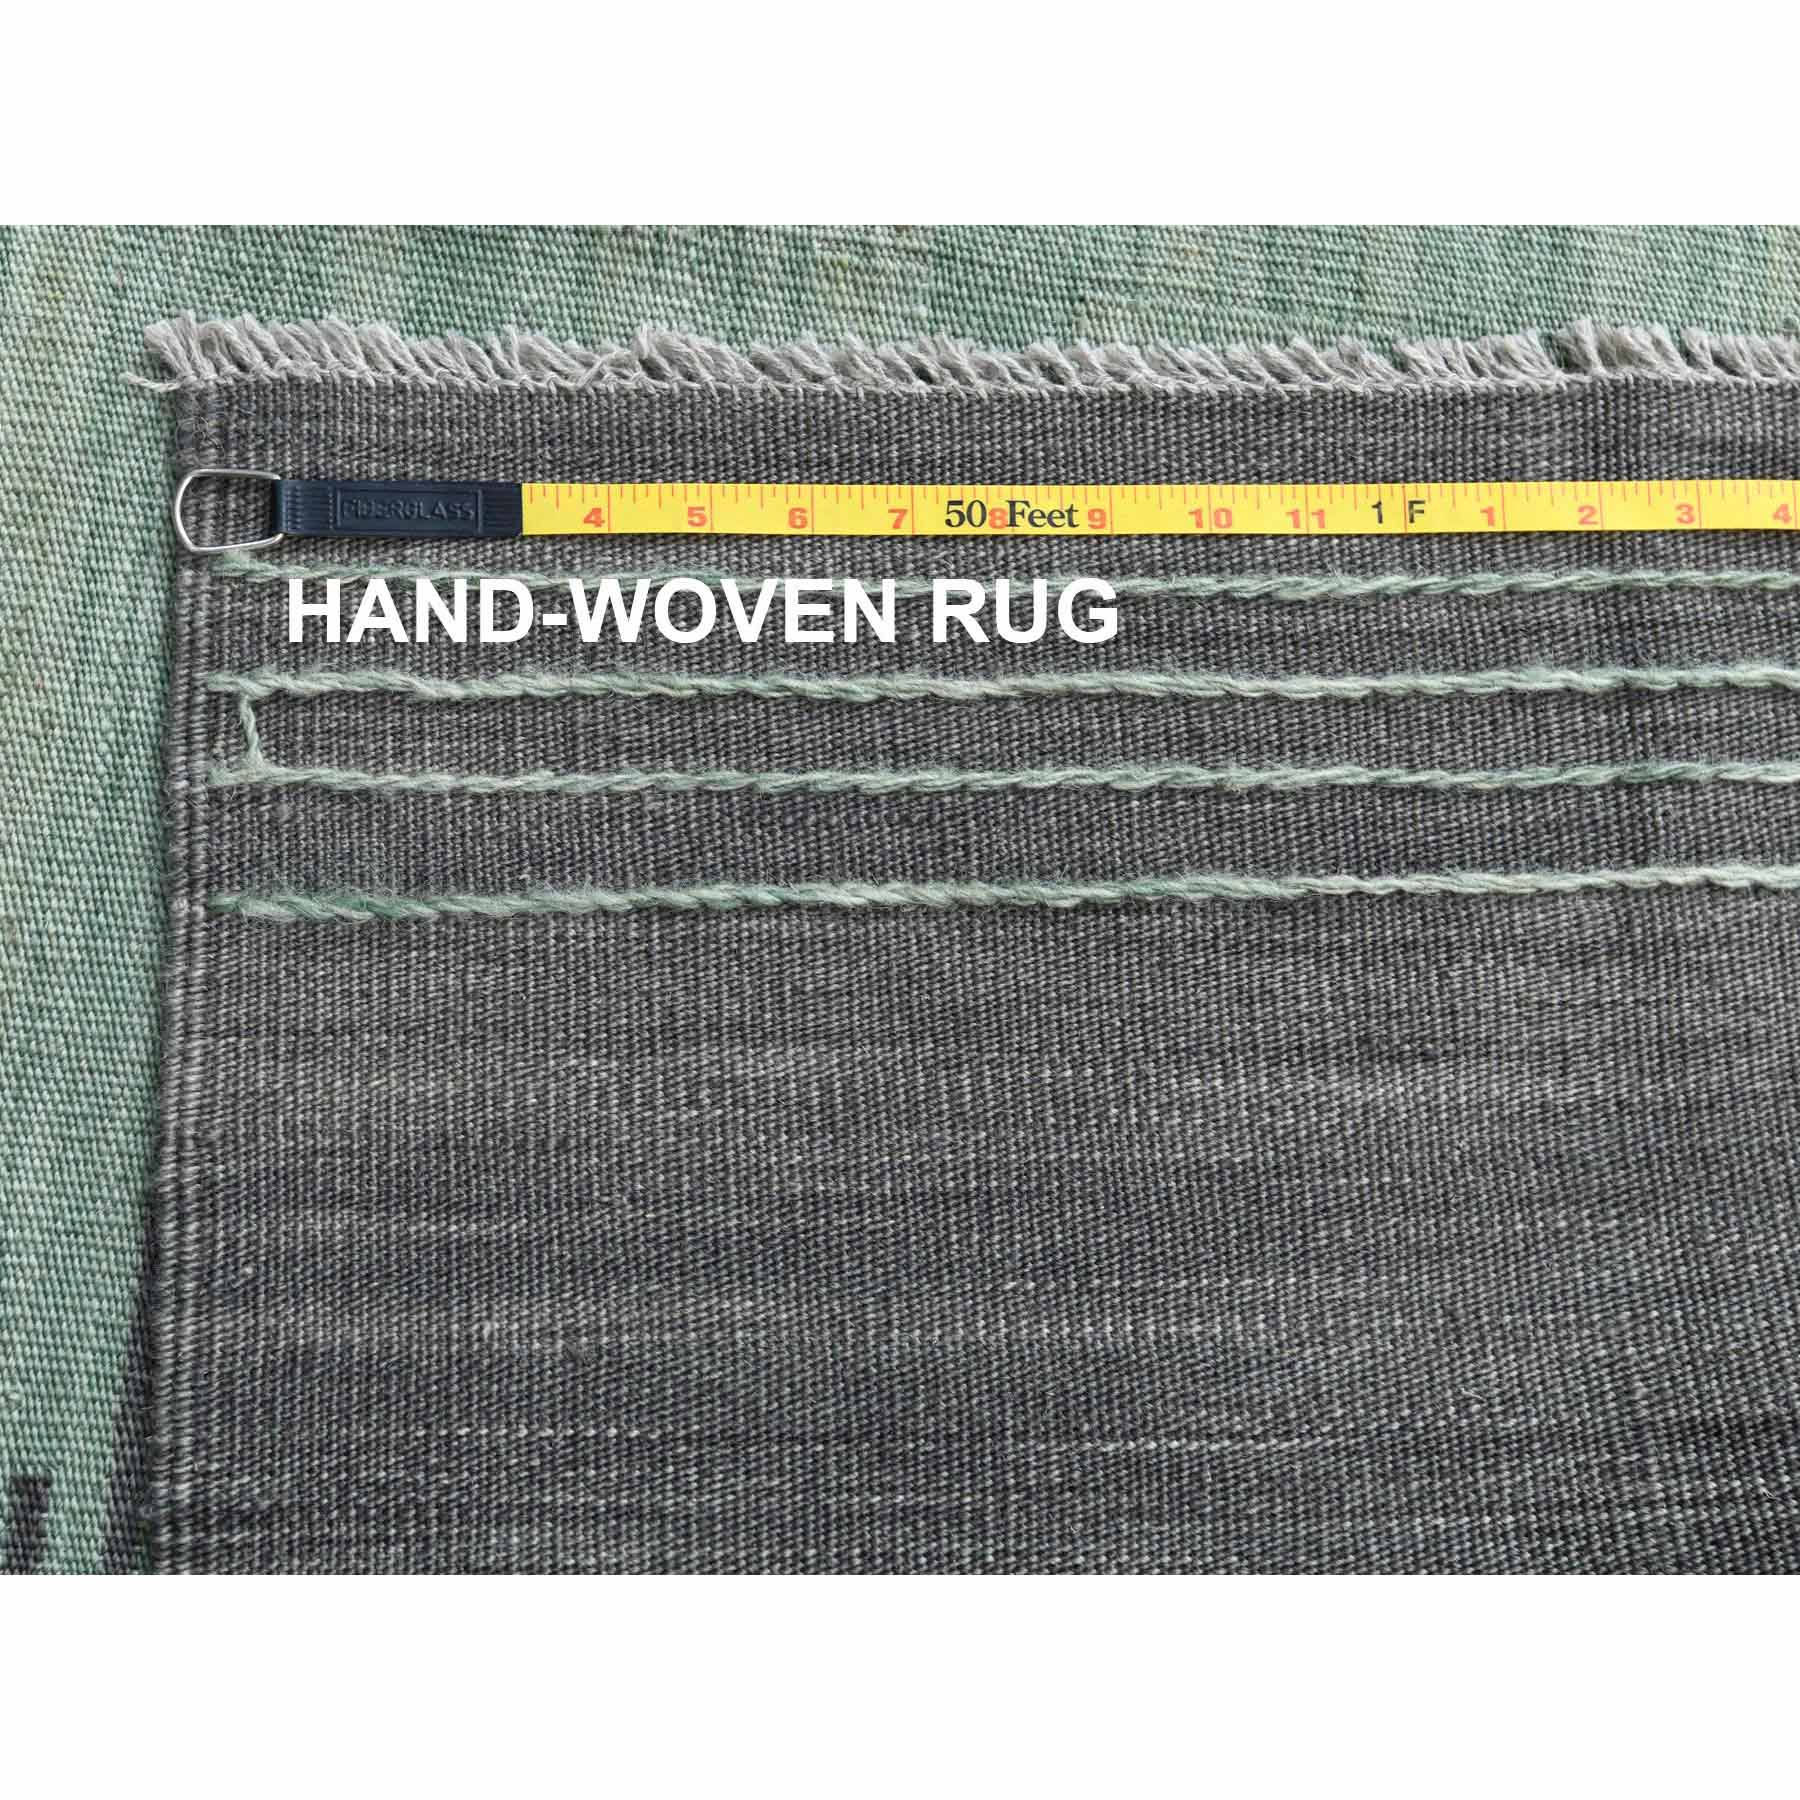 Flat-Weave-Hand-Woven-Rug-300105